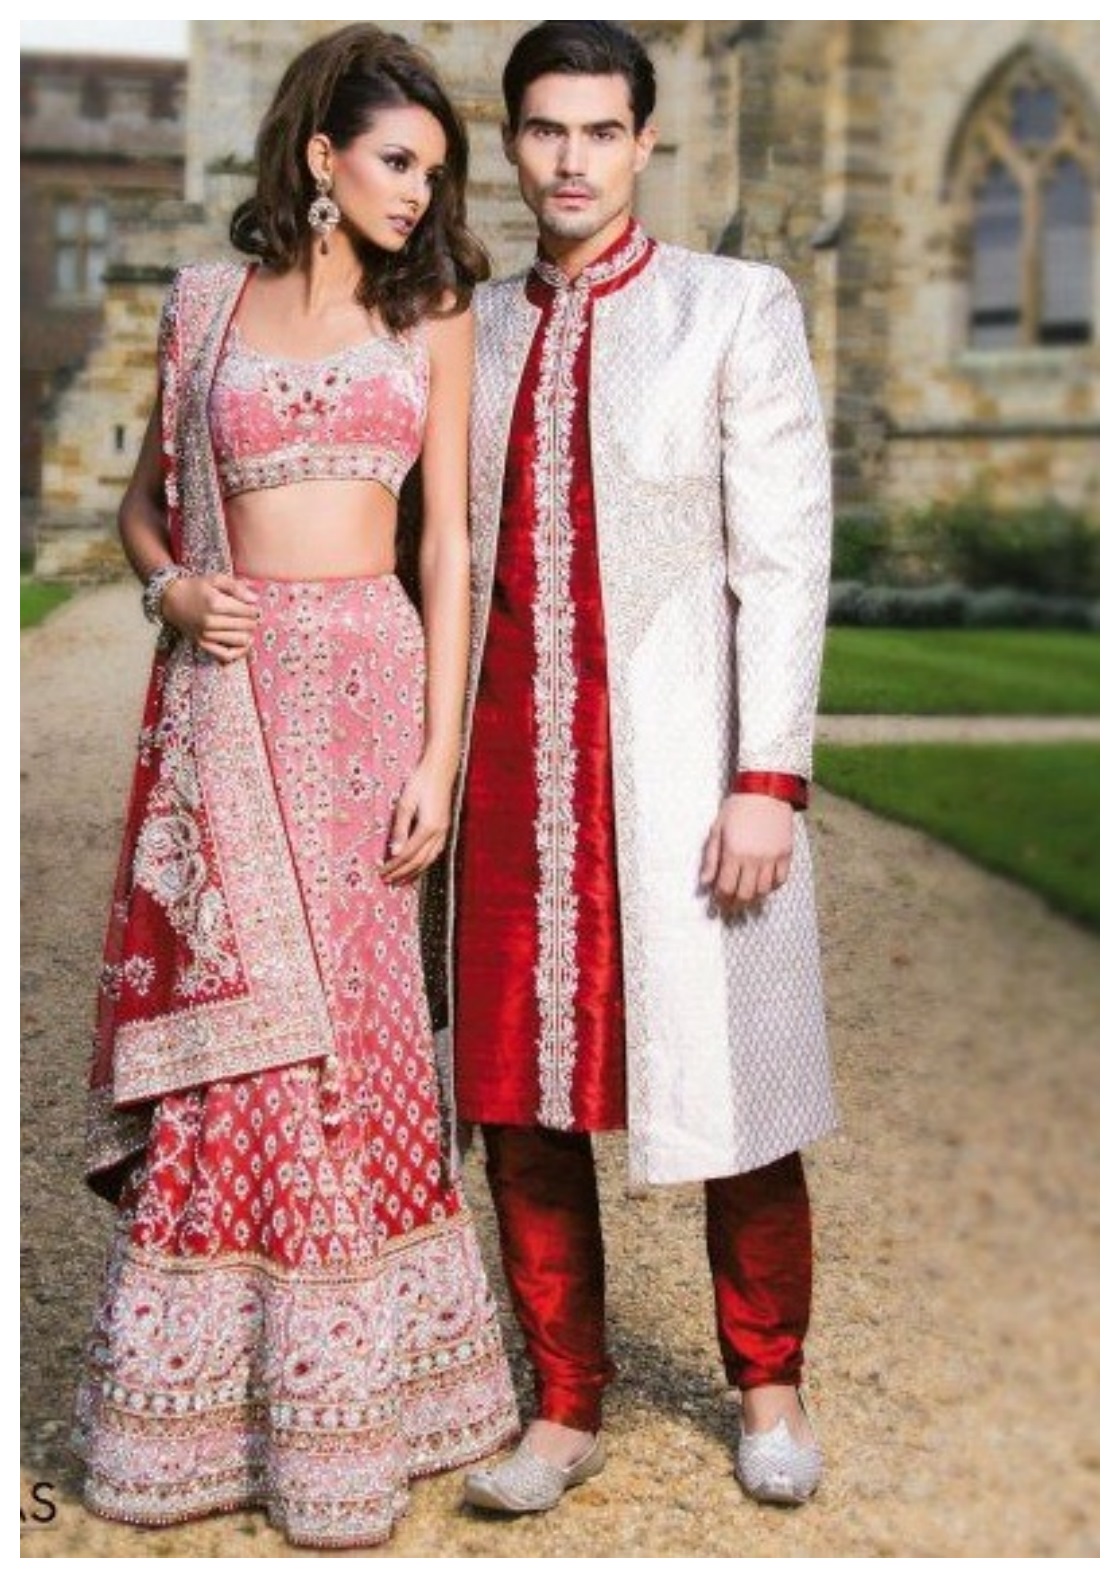 Best Indian Wedding Dresses 2018 for Men Women (Bridal Groom Ideas)